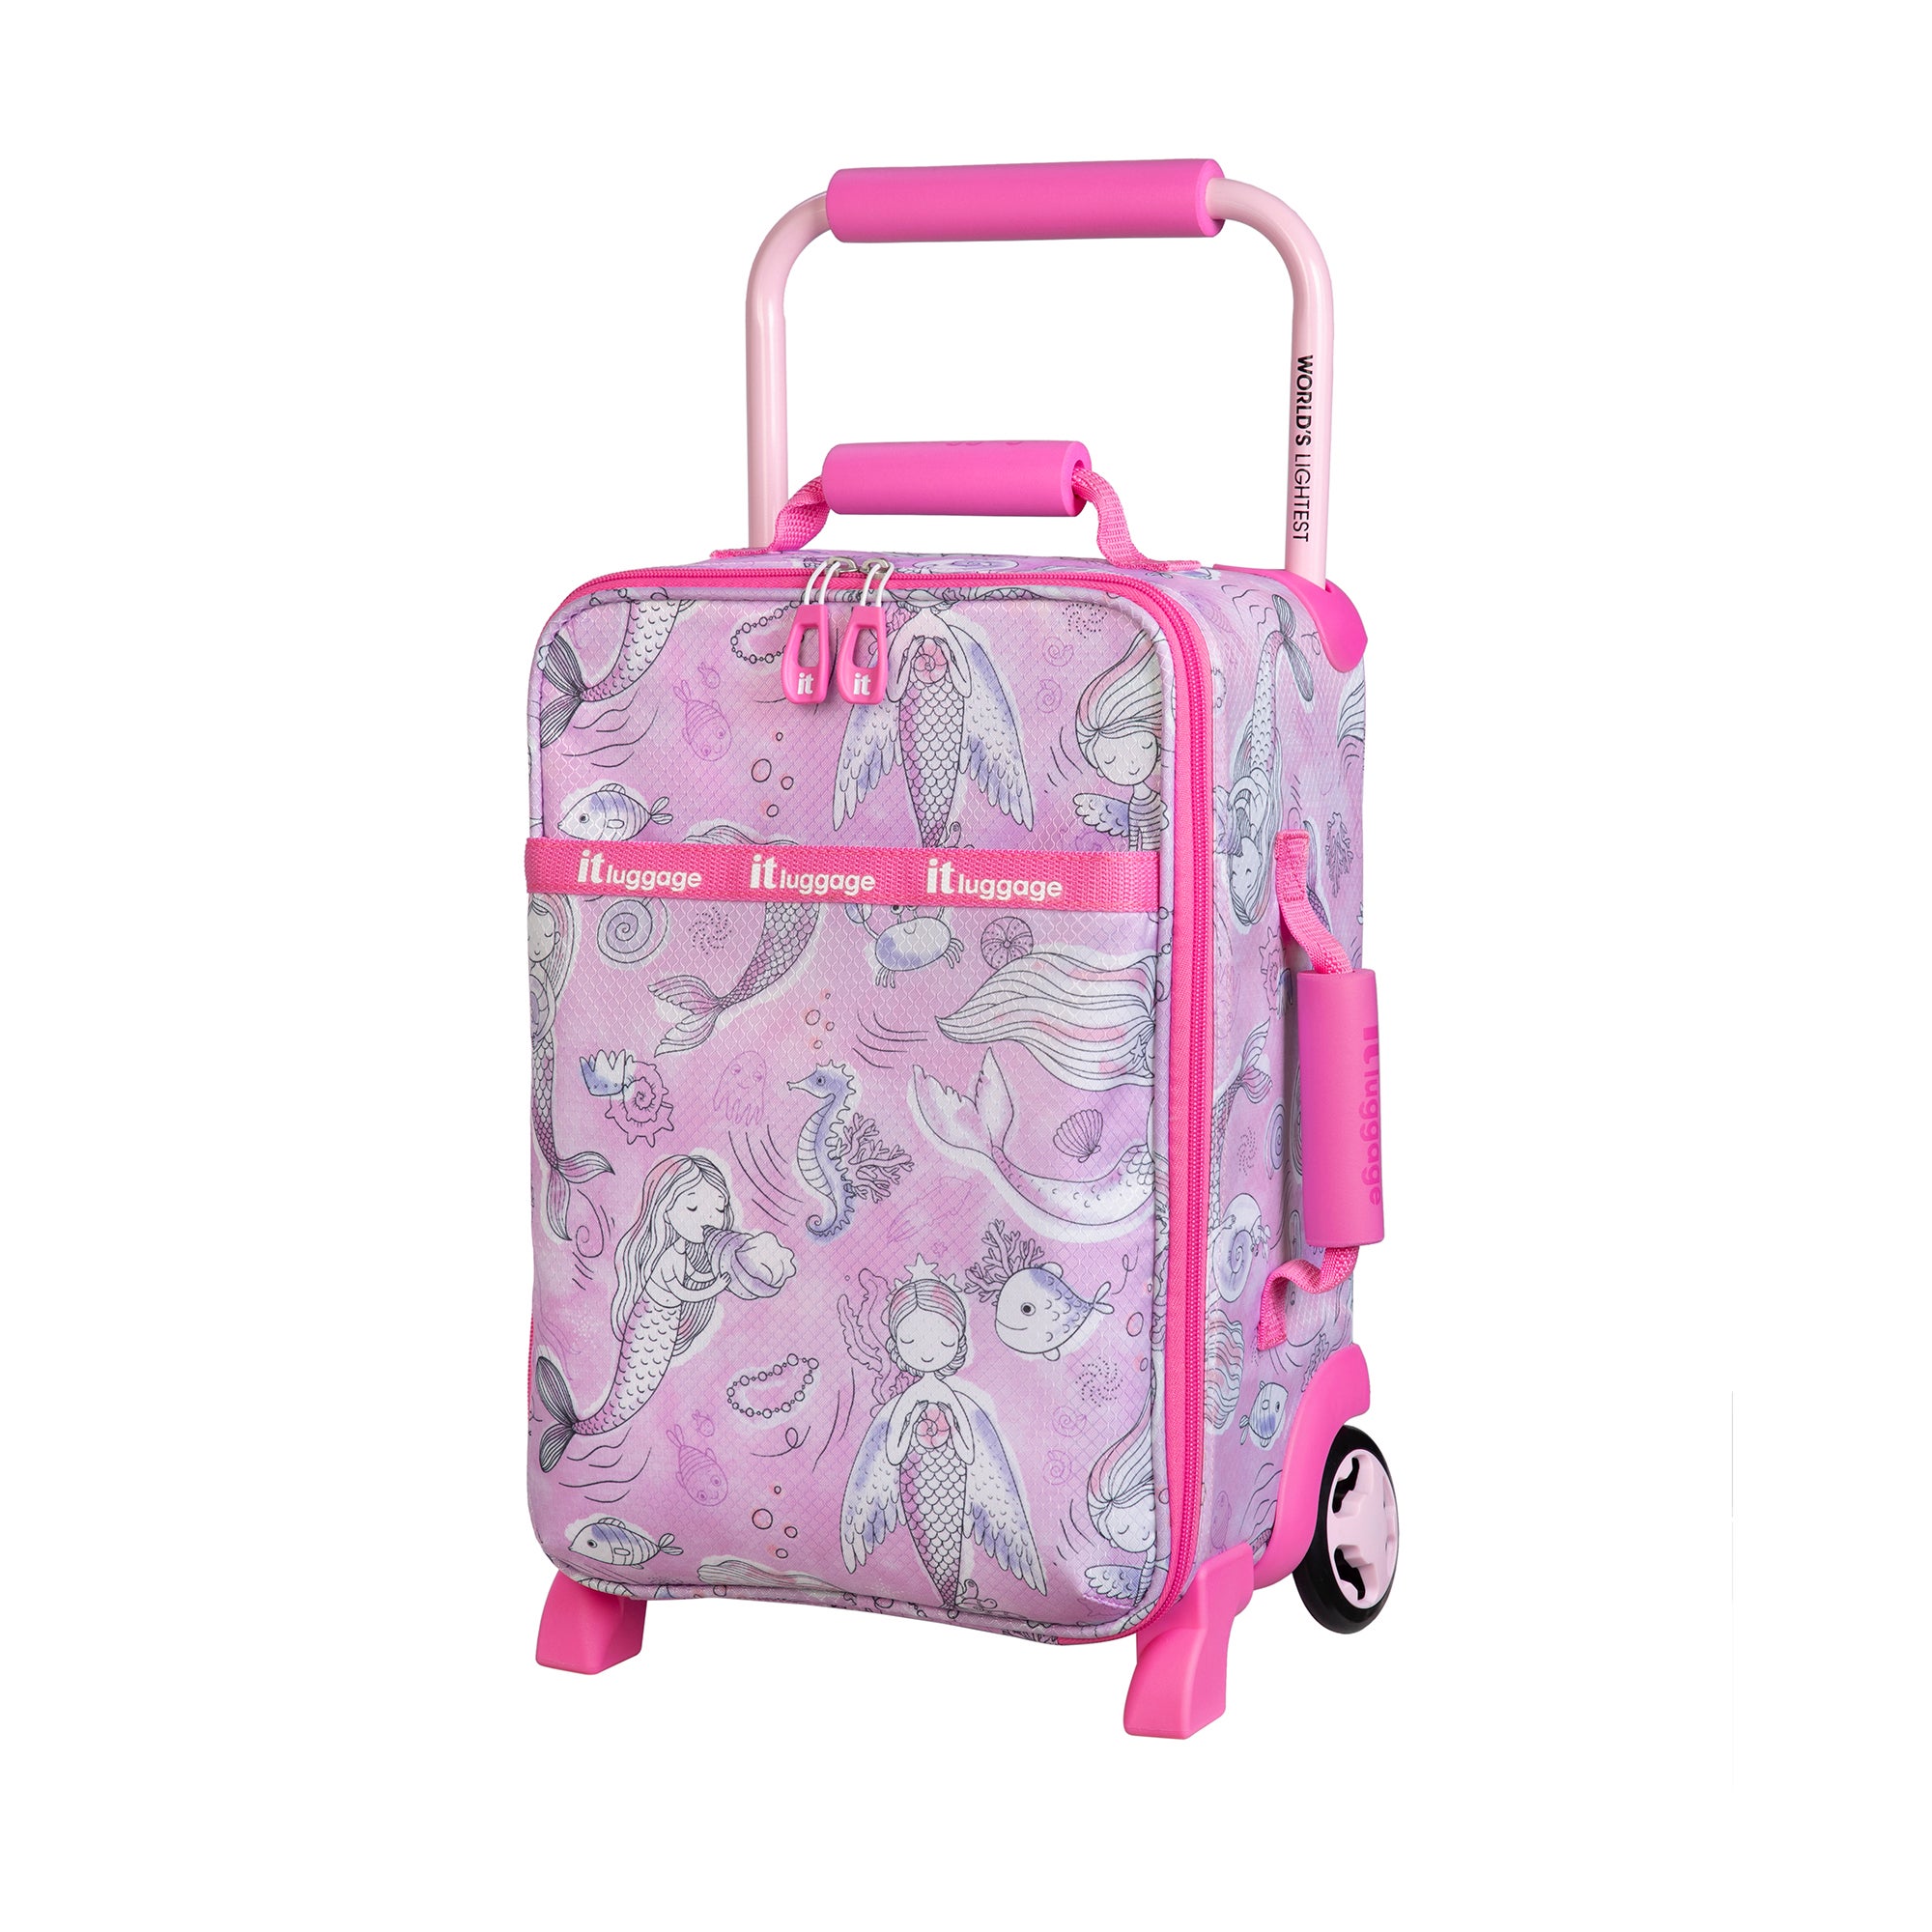 IT Luggage Curiosity Soft Shell Kiddies Mermaid Print Pink Suitcase